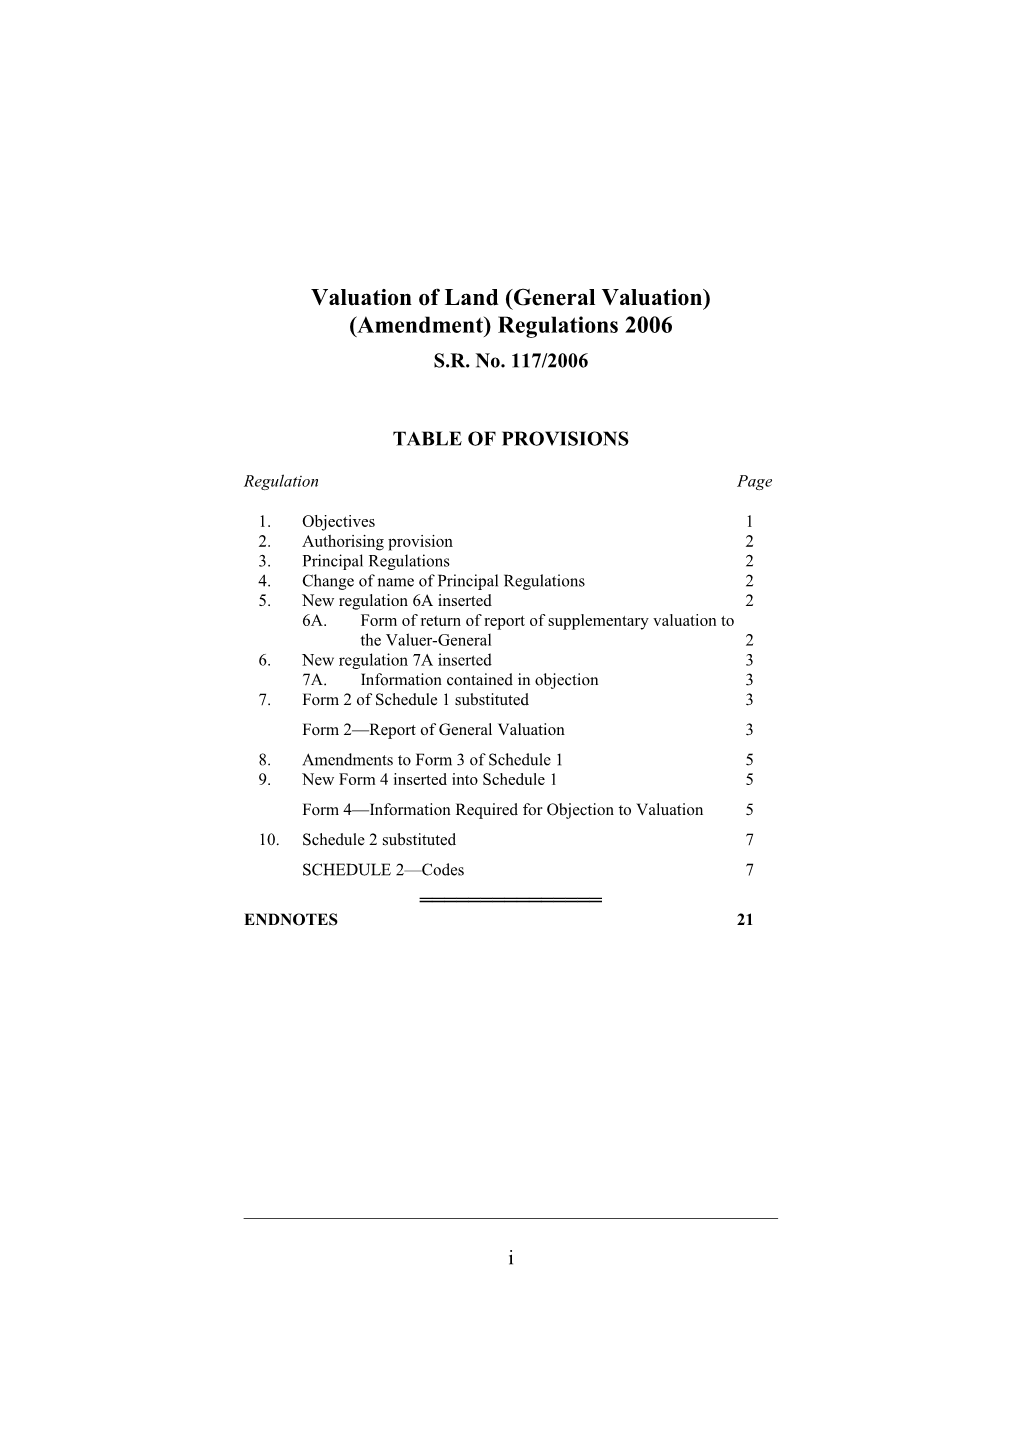 Valuation of Land (General Valuation) (Amendment) Regulations 2006